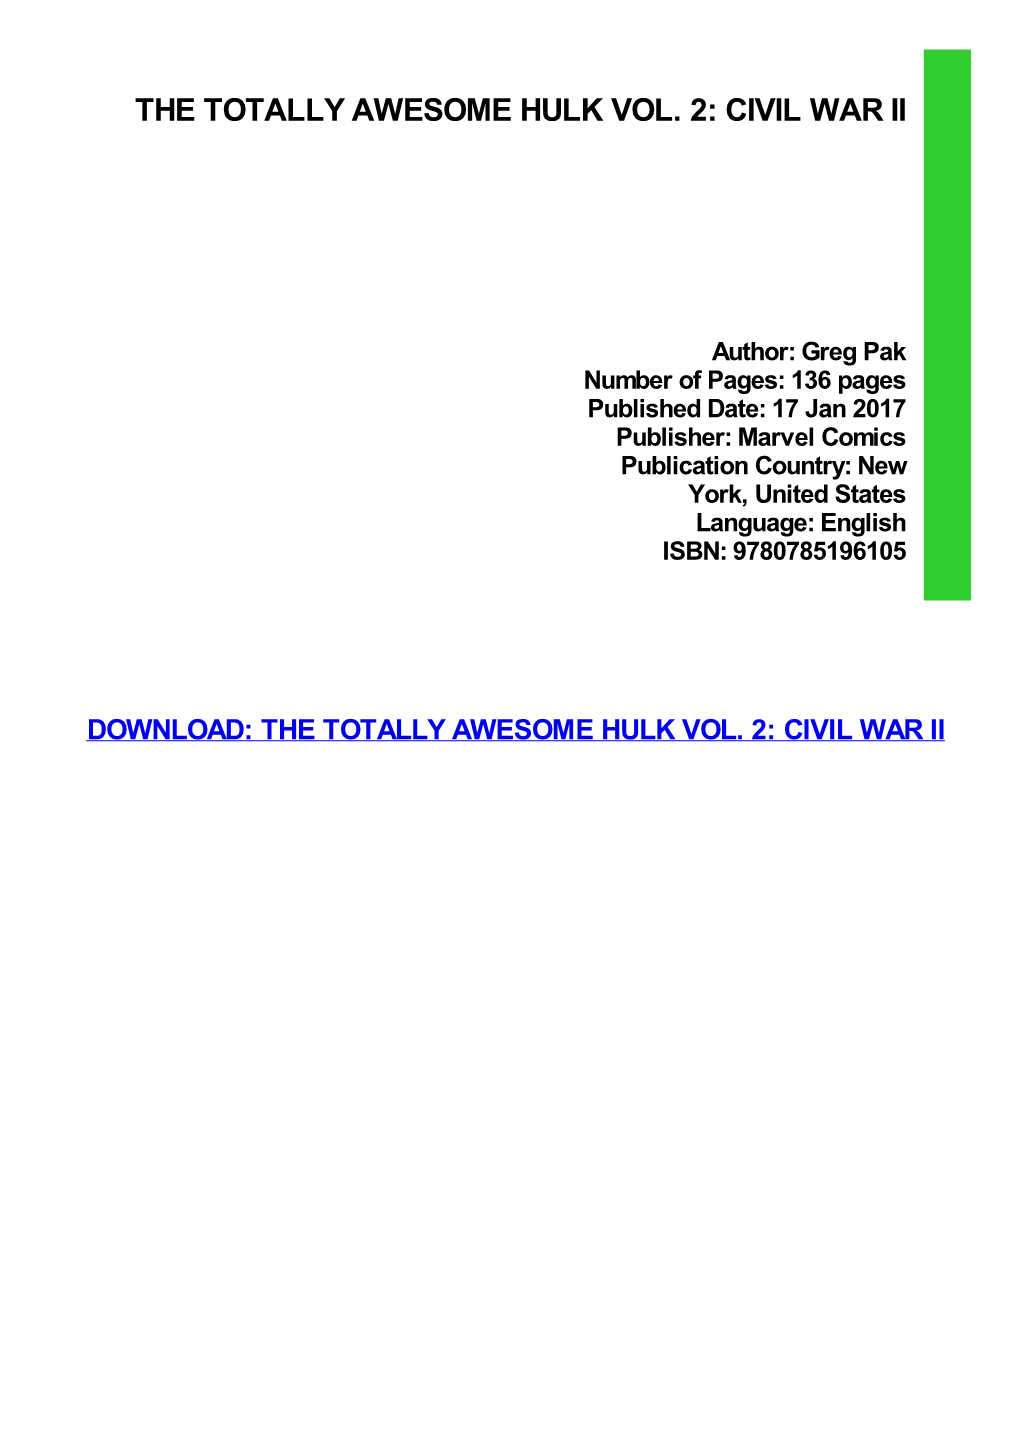 Read Book the Totally Awesome Hulk Vol. 2: Civil War Ii